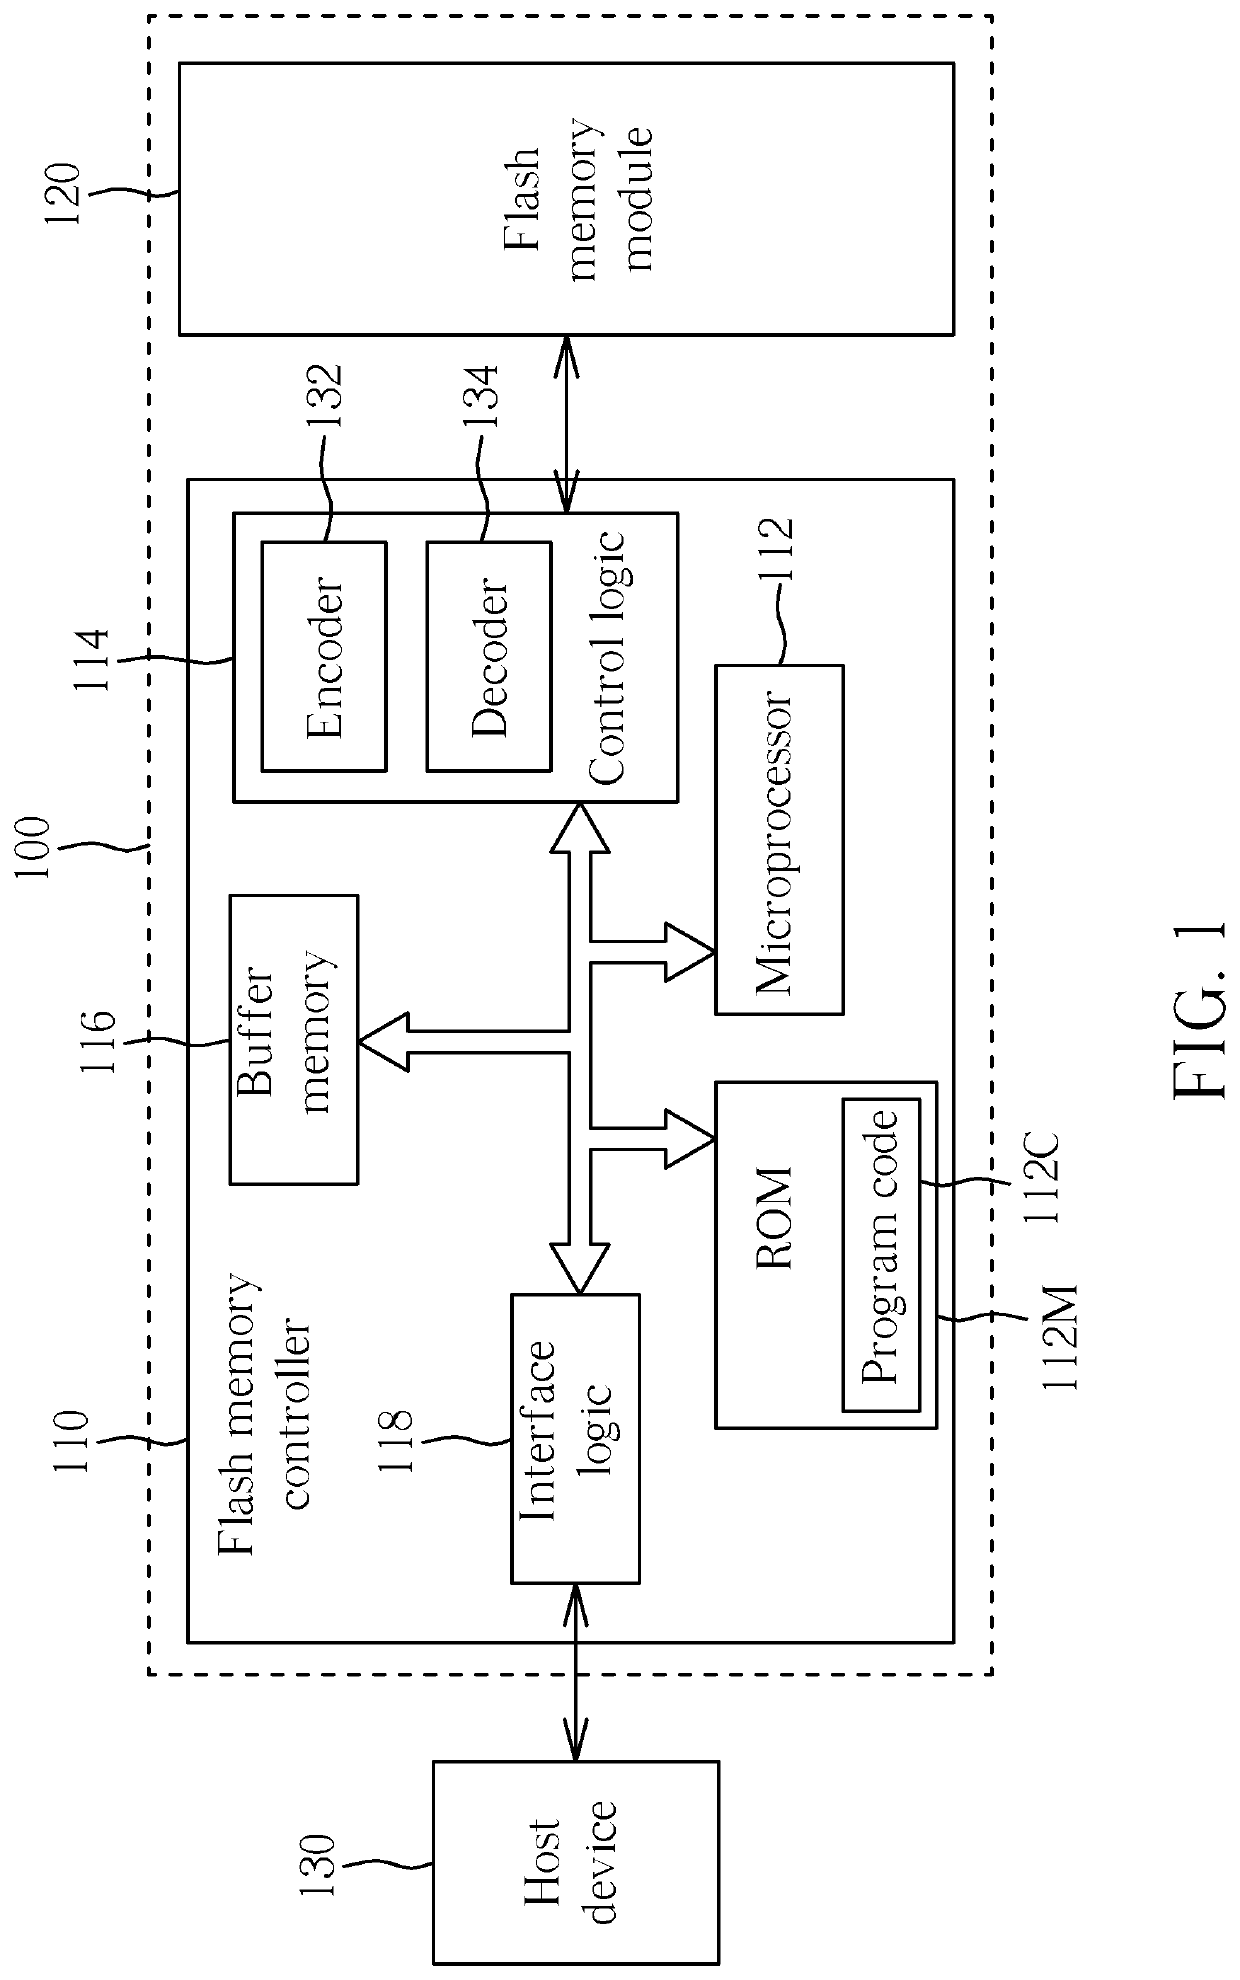 Encoder, associated encoding method and flash memory controller